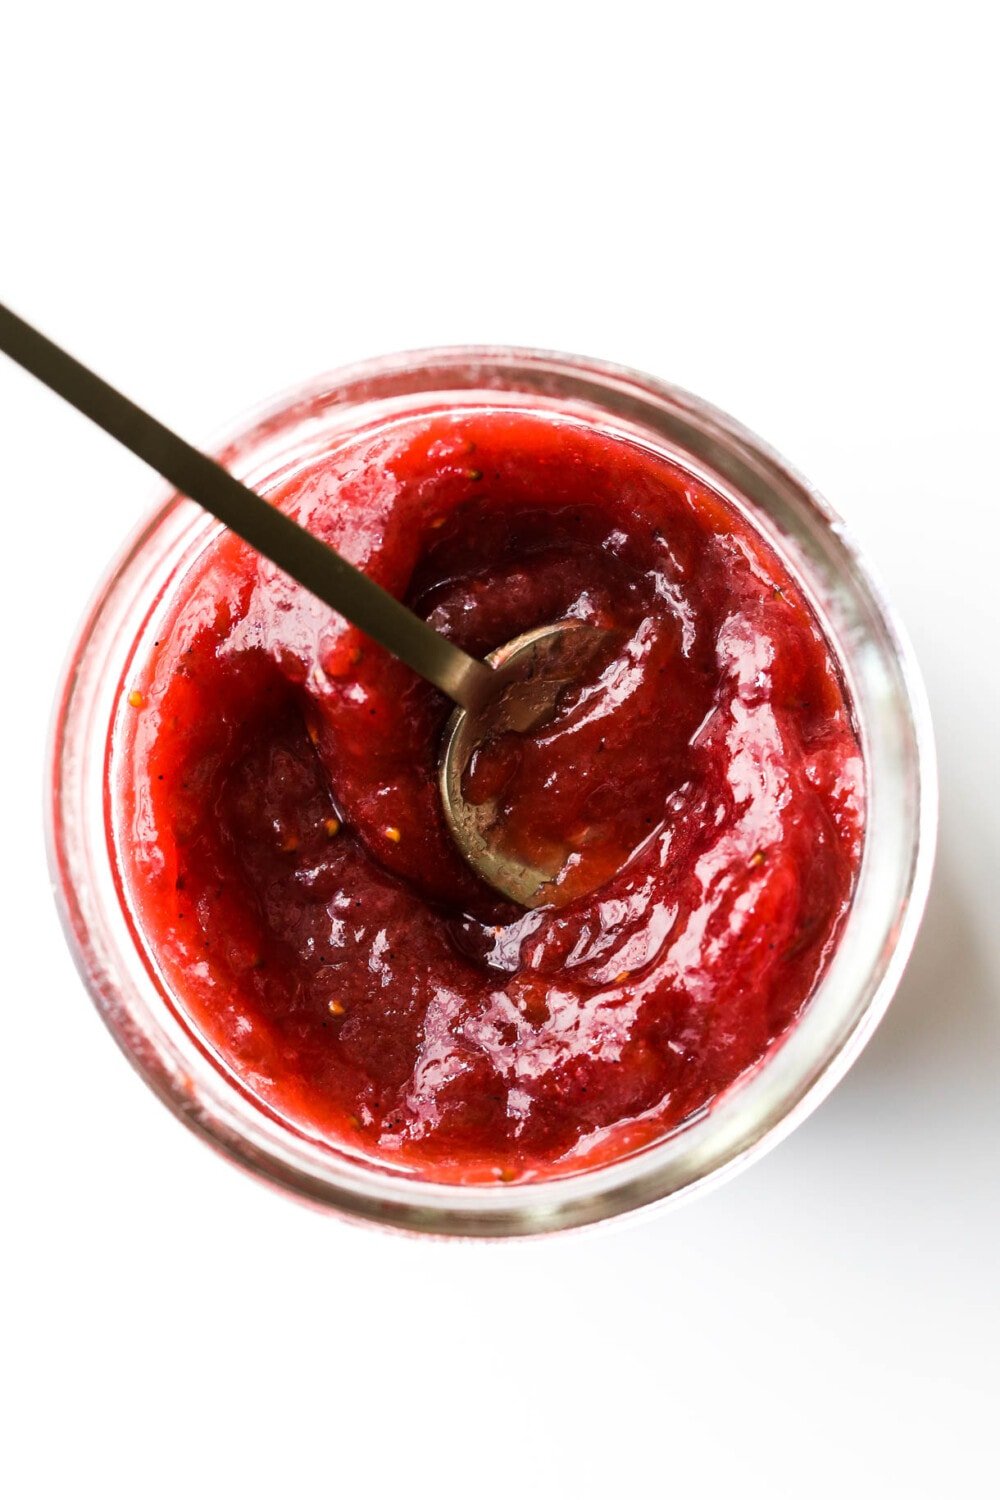 strawberry rhubarb jam in a clear jar with spoon